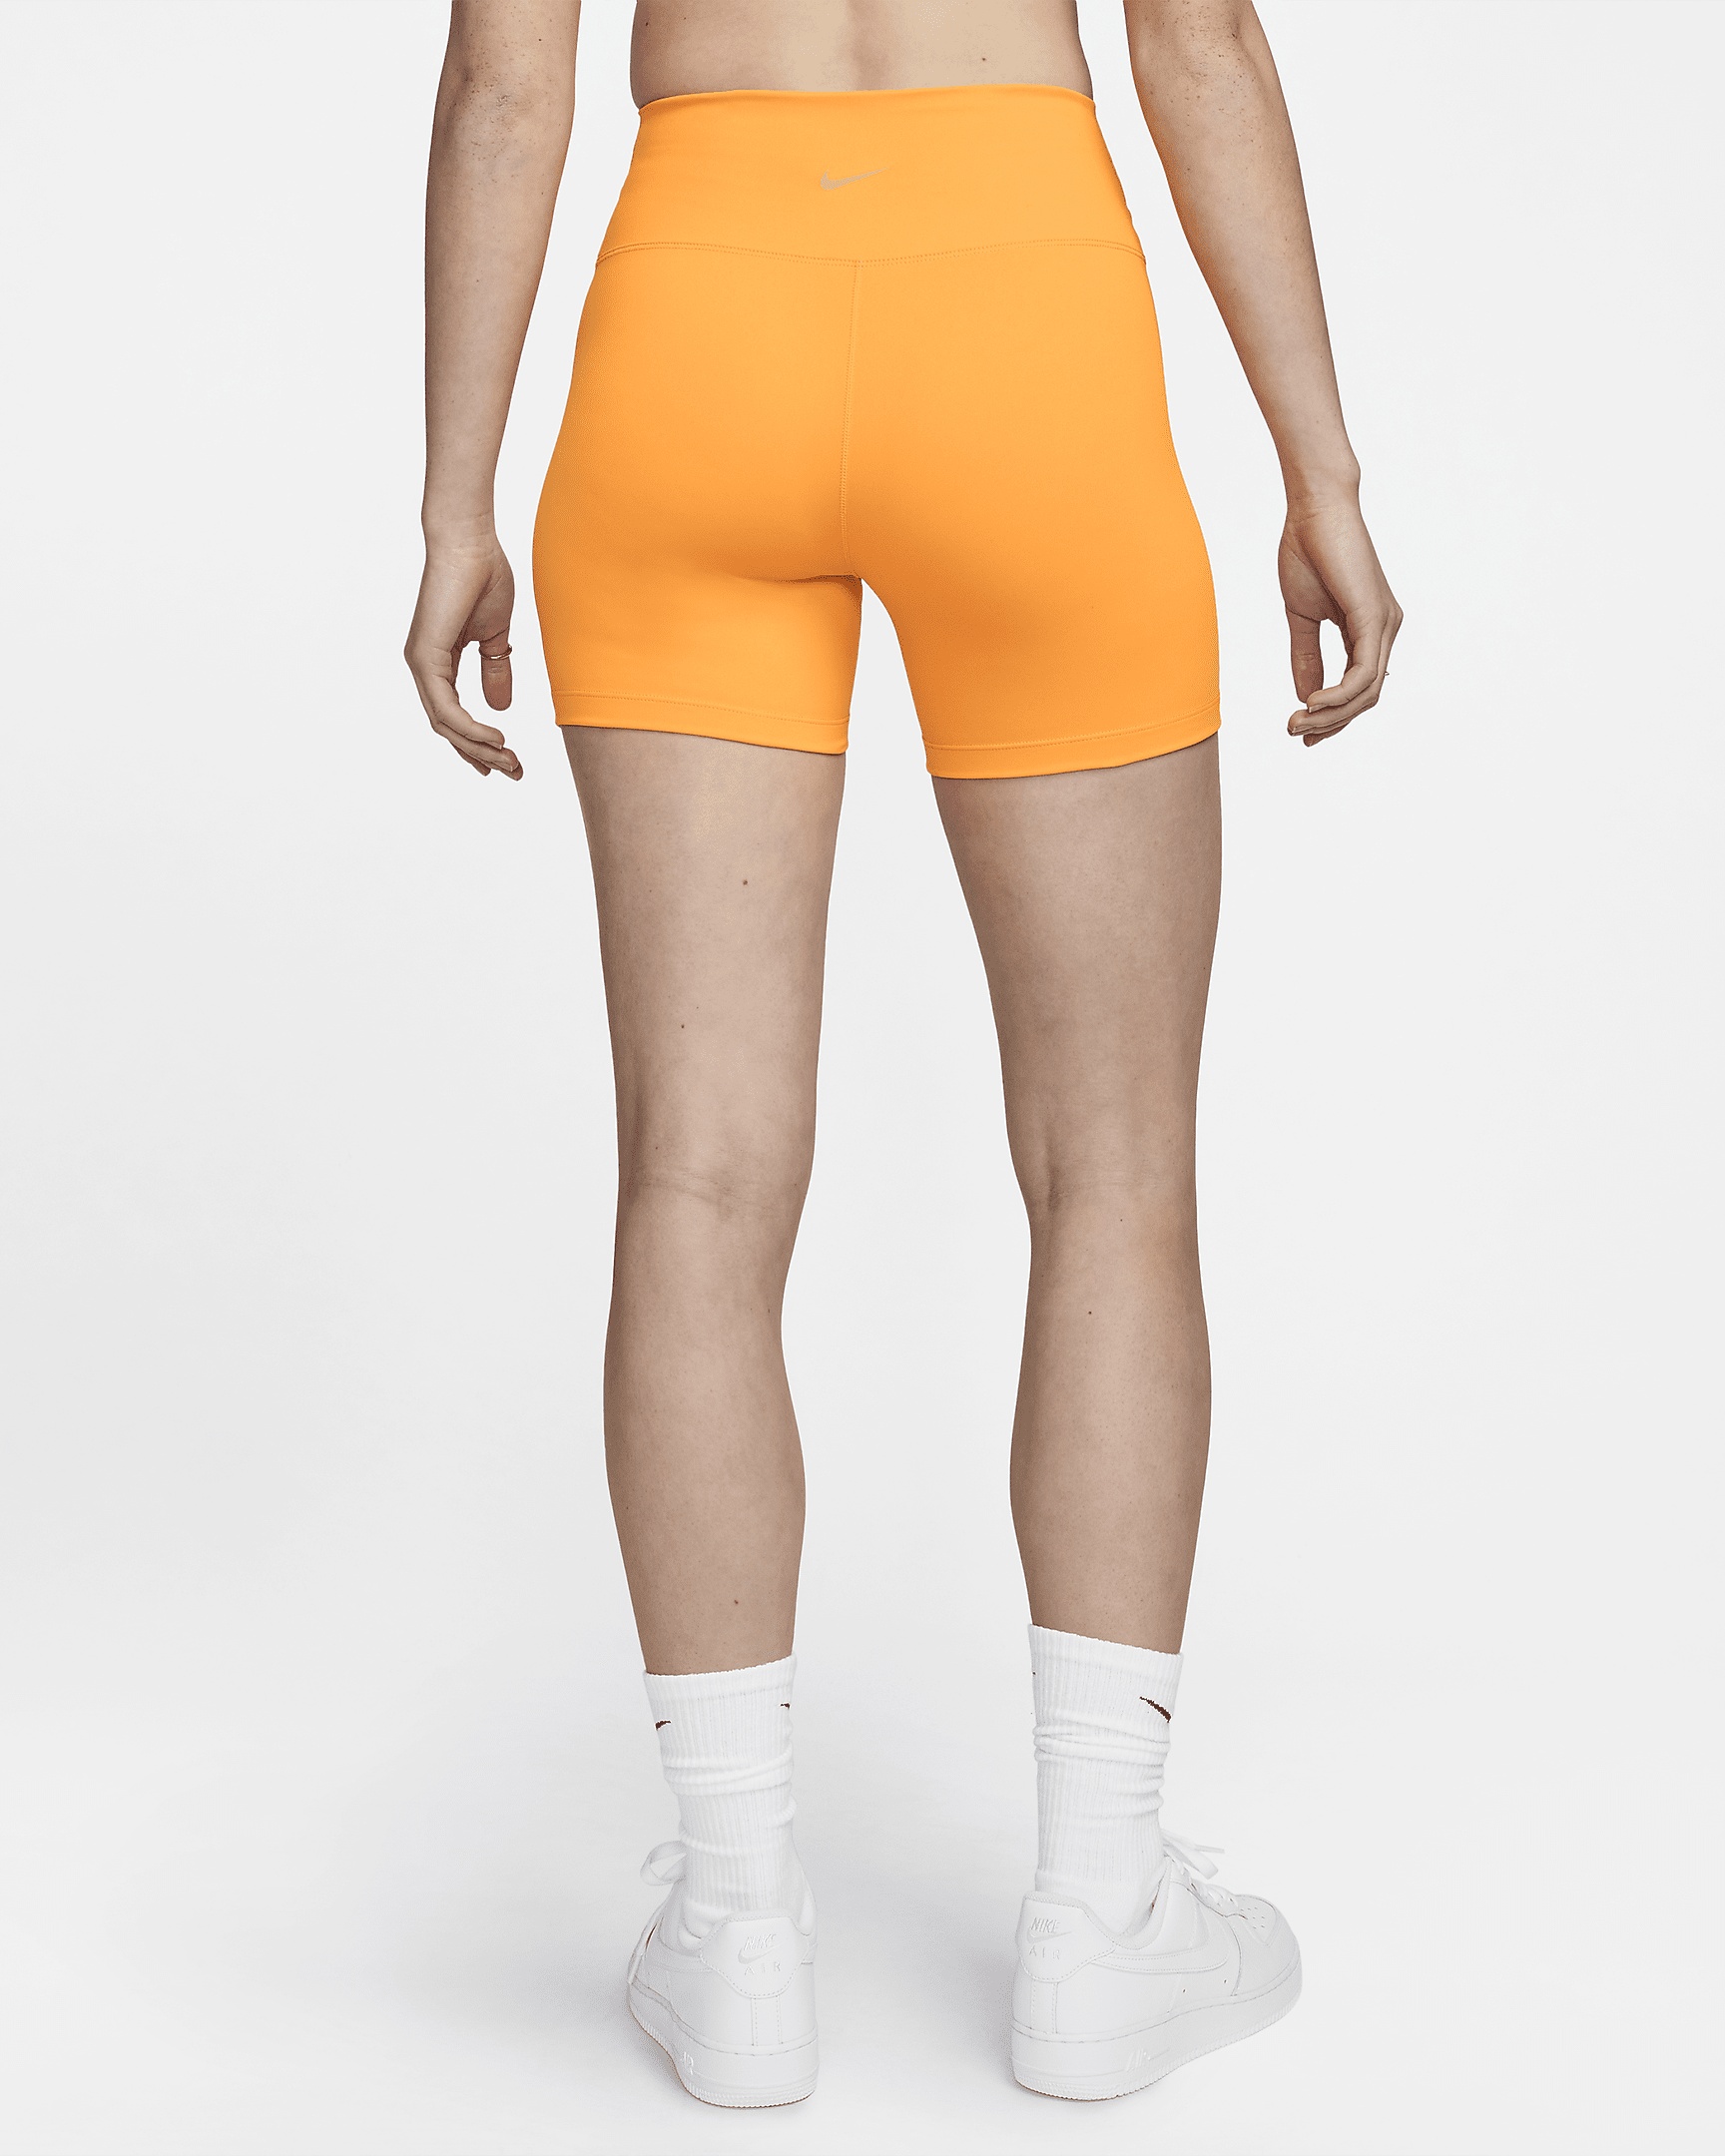 Nike Women's One High-Waisted 5" Biker Shorts - 2